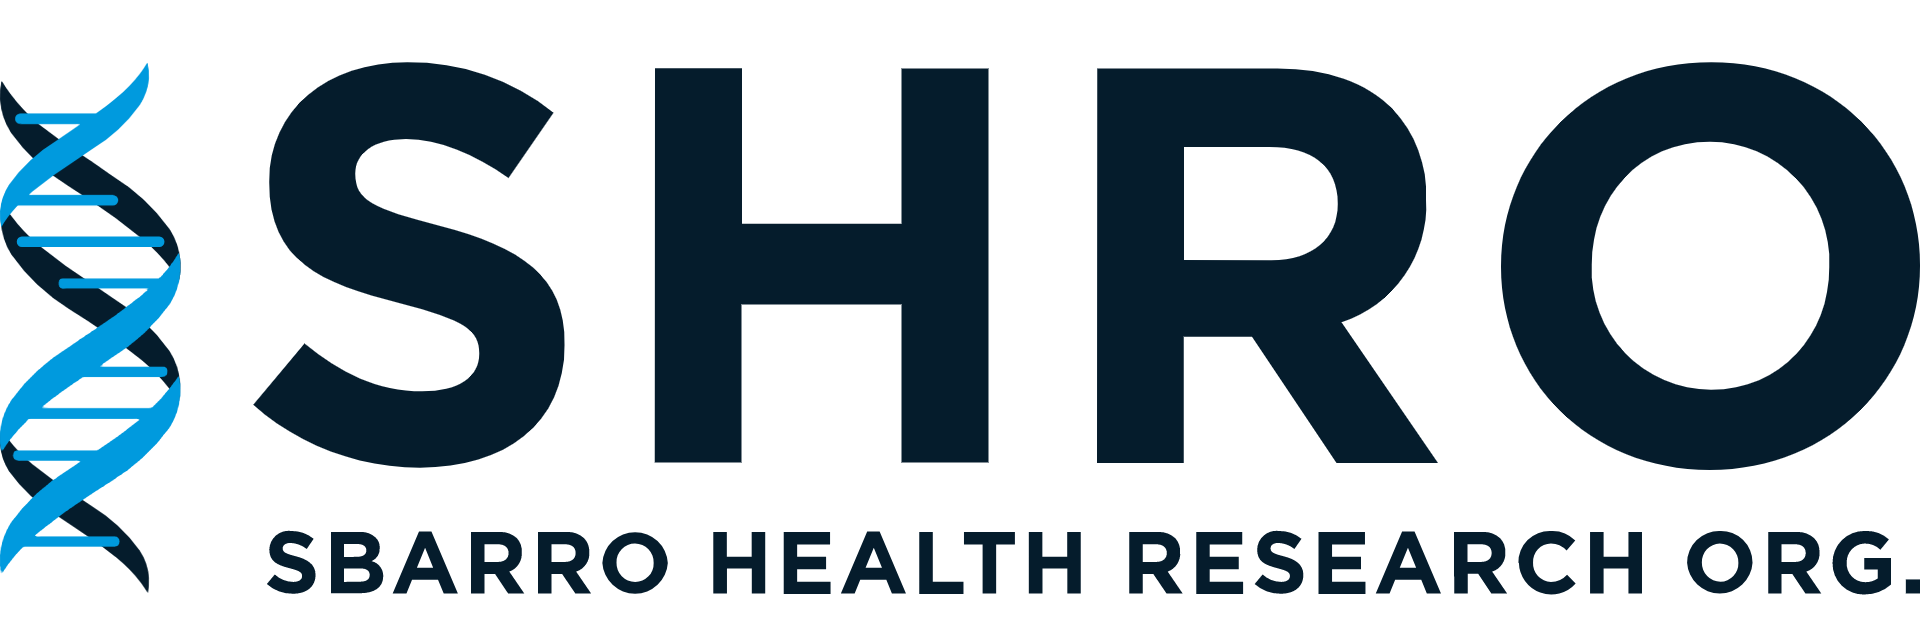 SBARRO Health Research Organization - Charity Partner 73° gp Lotteria